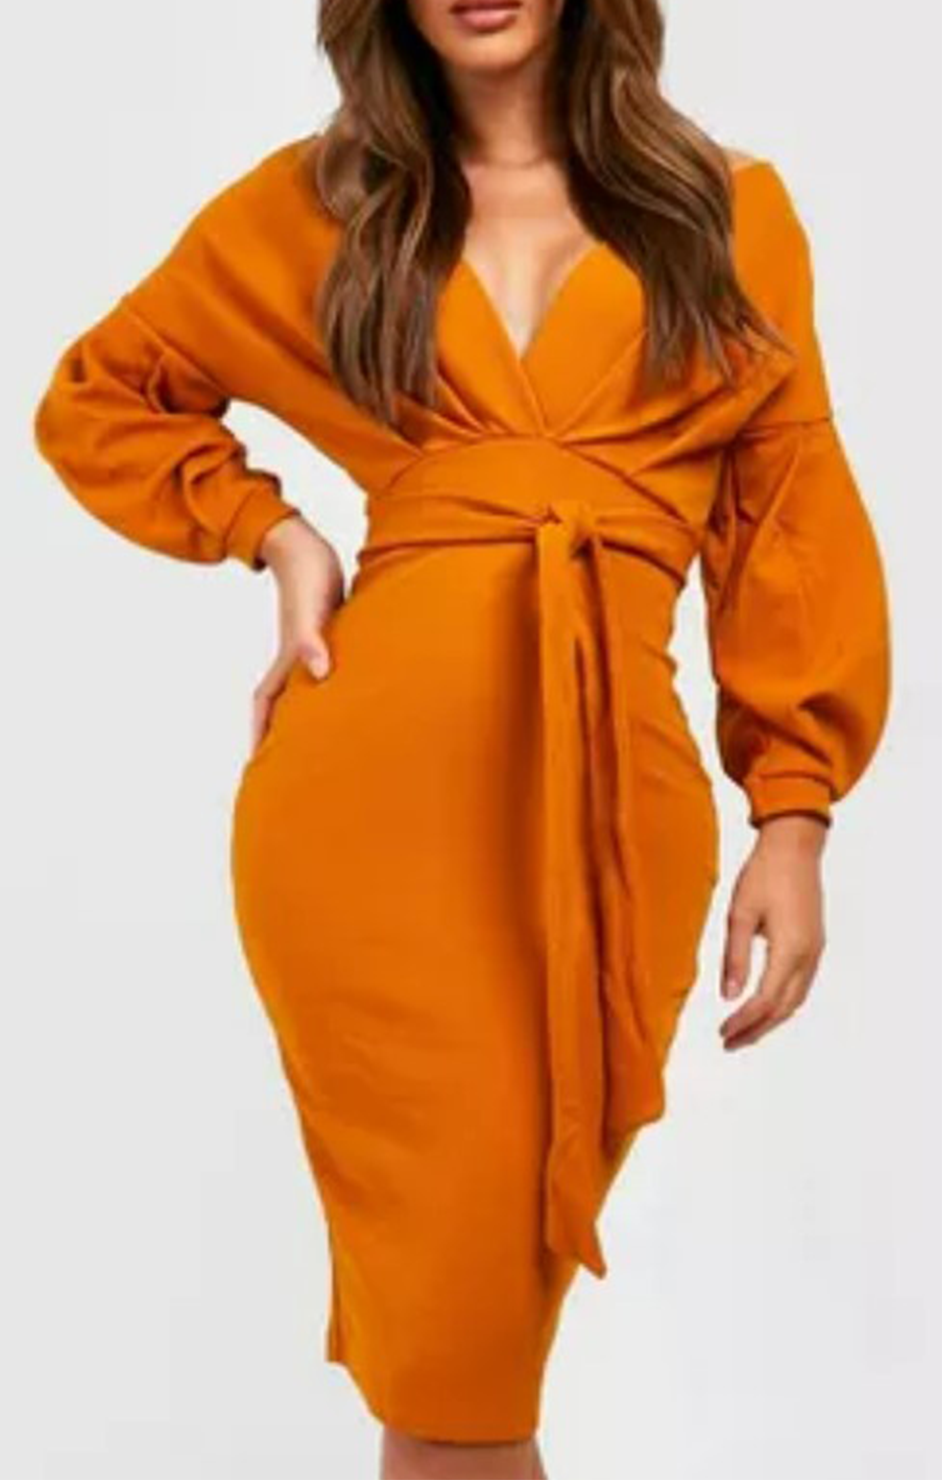 Unconventional Orange Dress